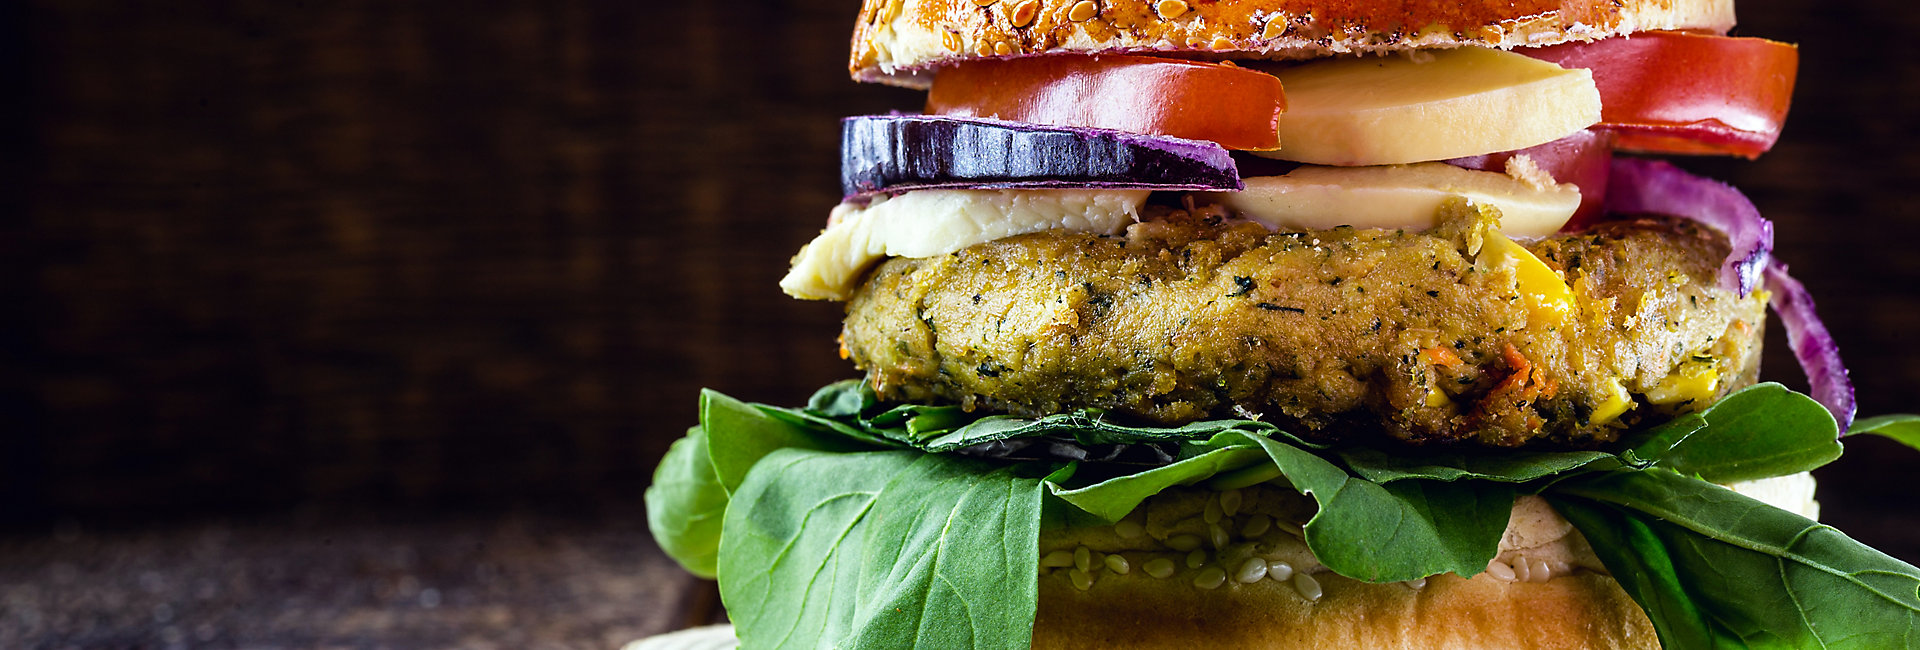 vegan burger on rustic wooden table, with vegetable burger and meat flavor. Healthy vegan food.; Shutterstock ID 1738054679; BU: kft; Region: south america; Purpose: blog article